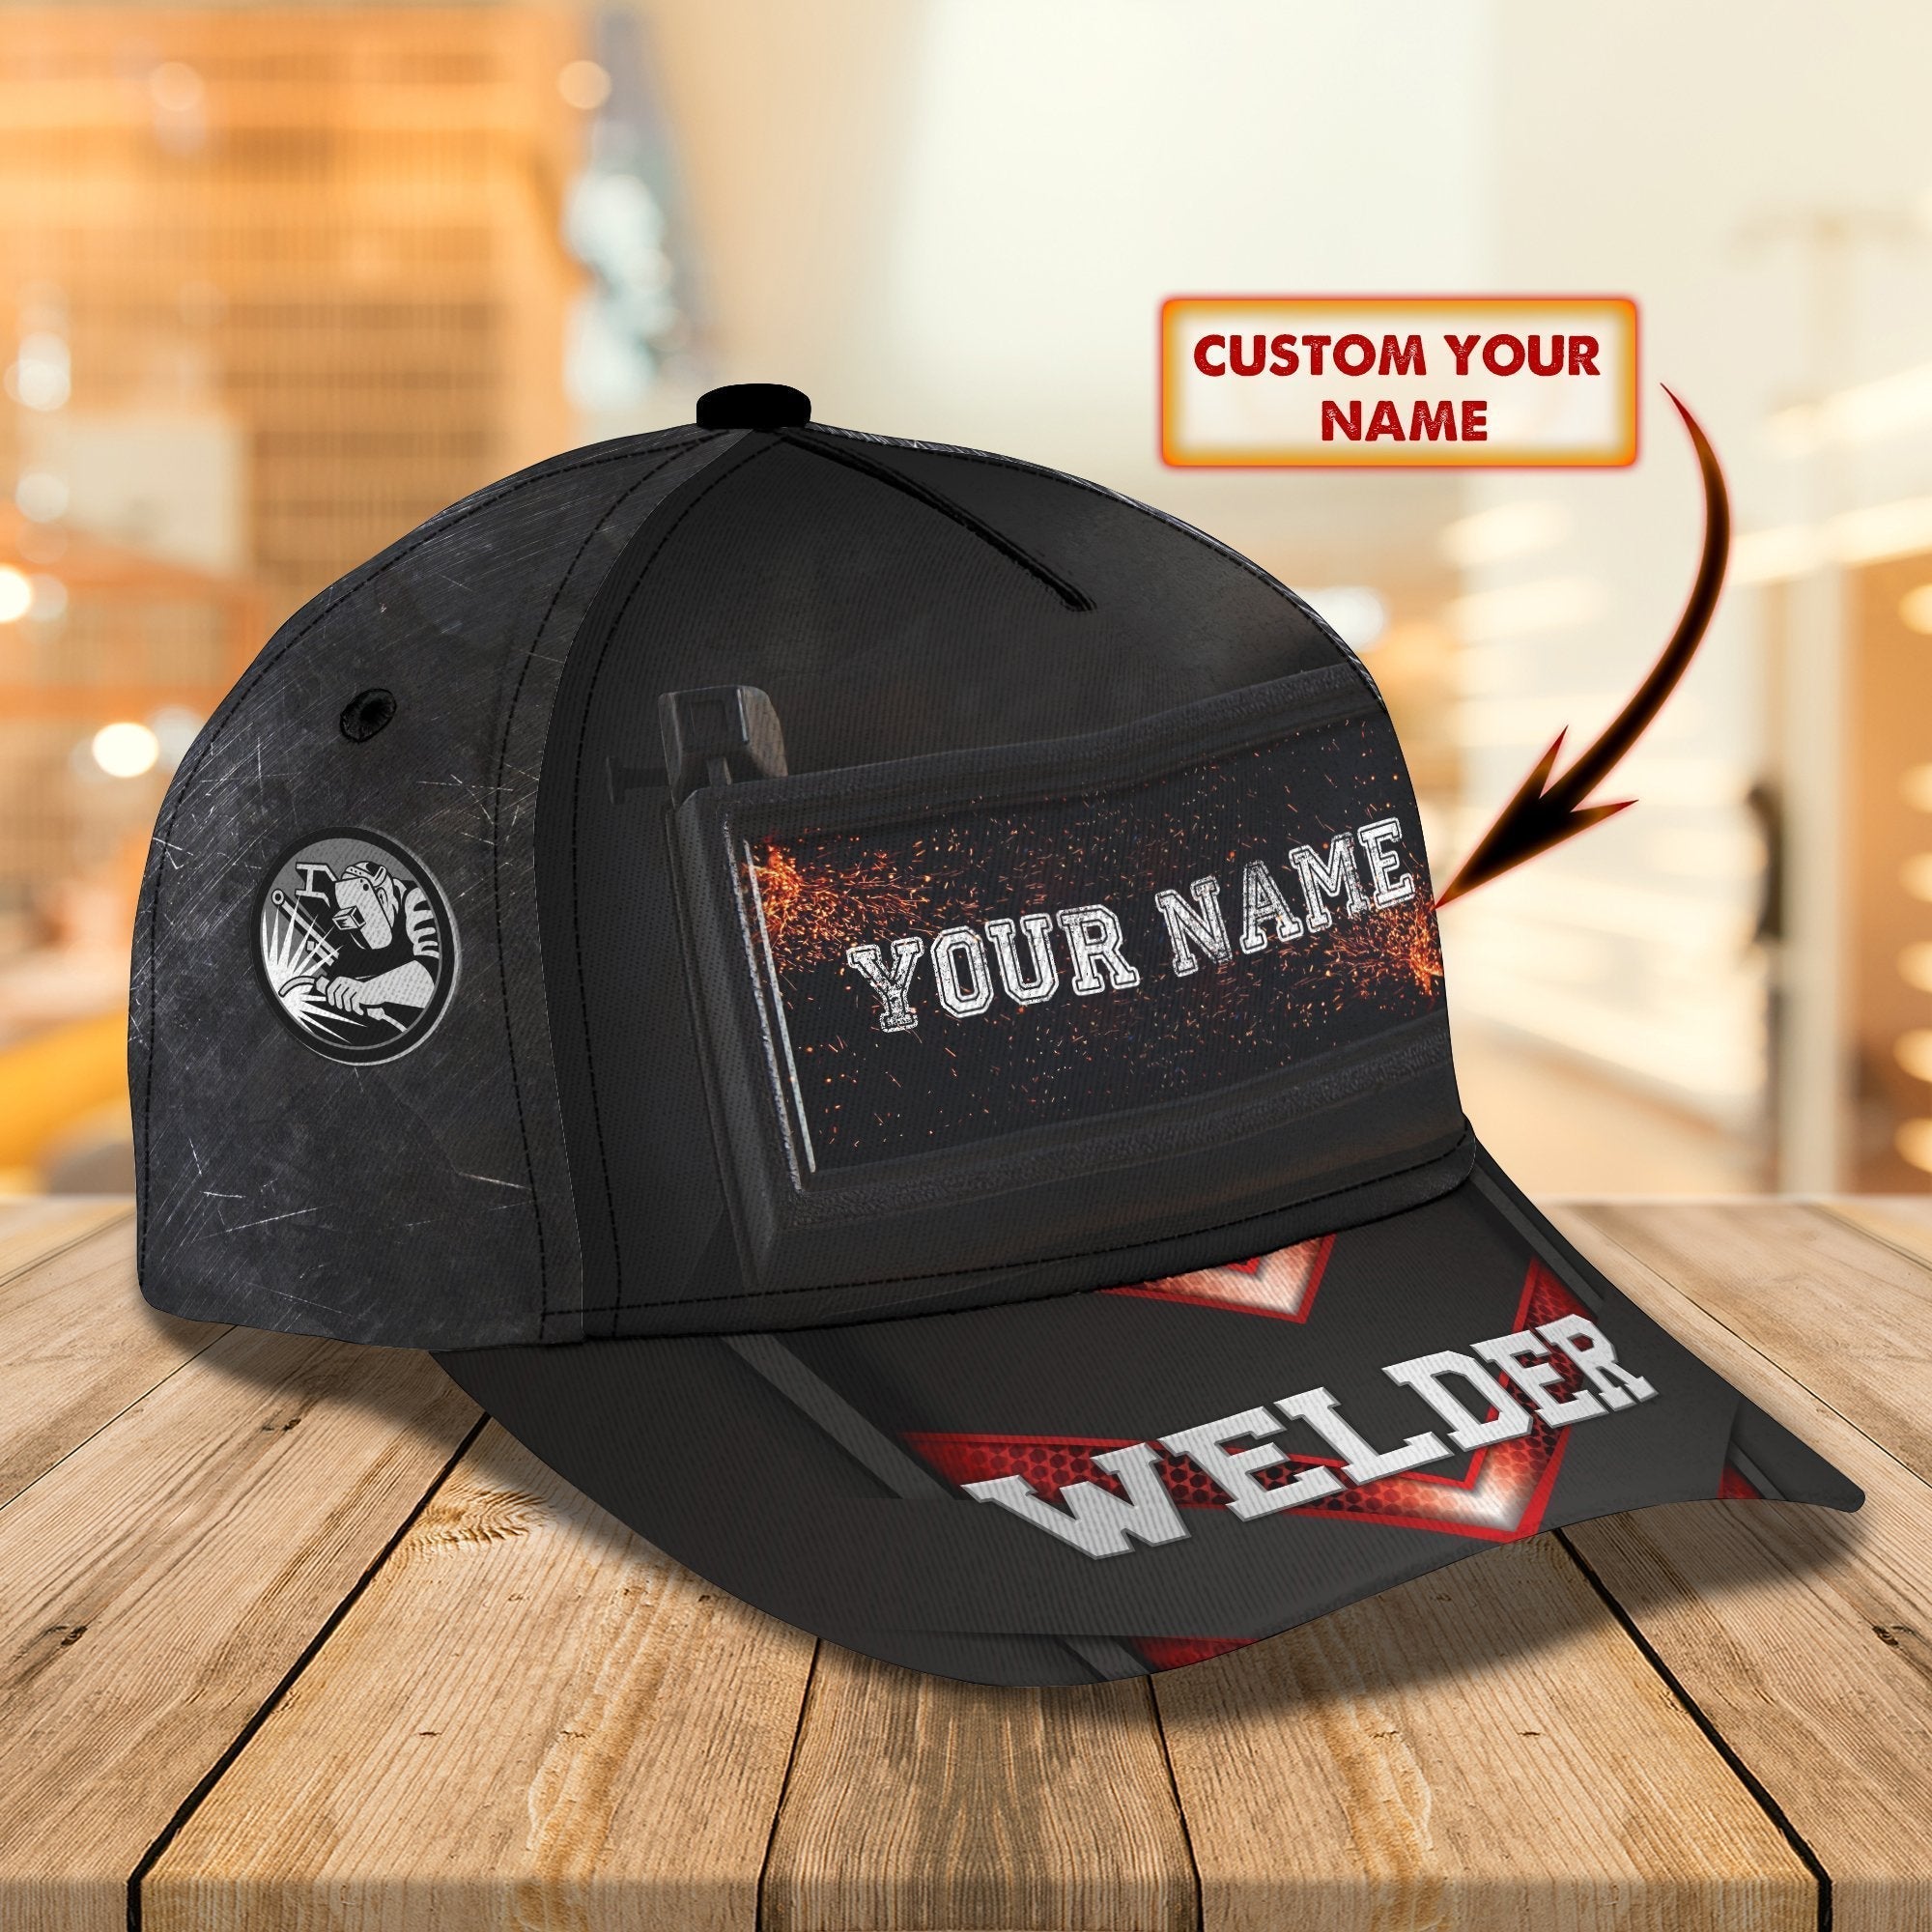 Personalized Welder Baseball Cap Hat/ Welder Classic Cap Hat For Summer Travel/ Welder Gift